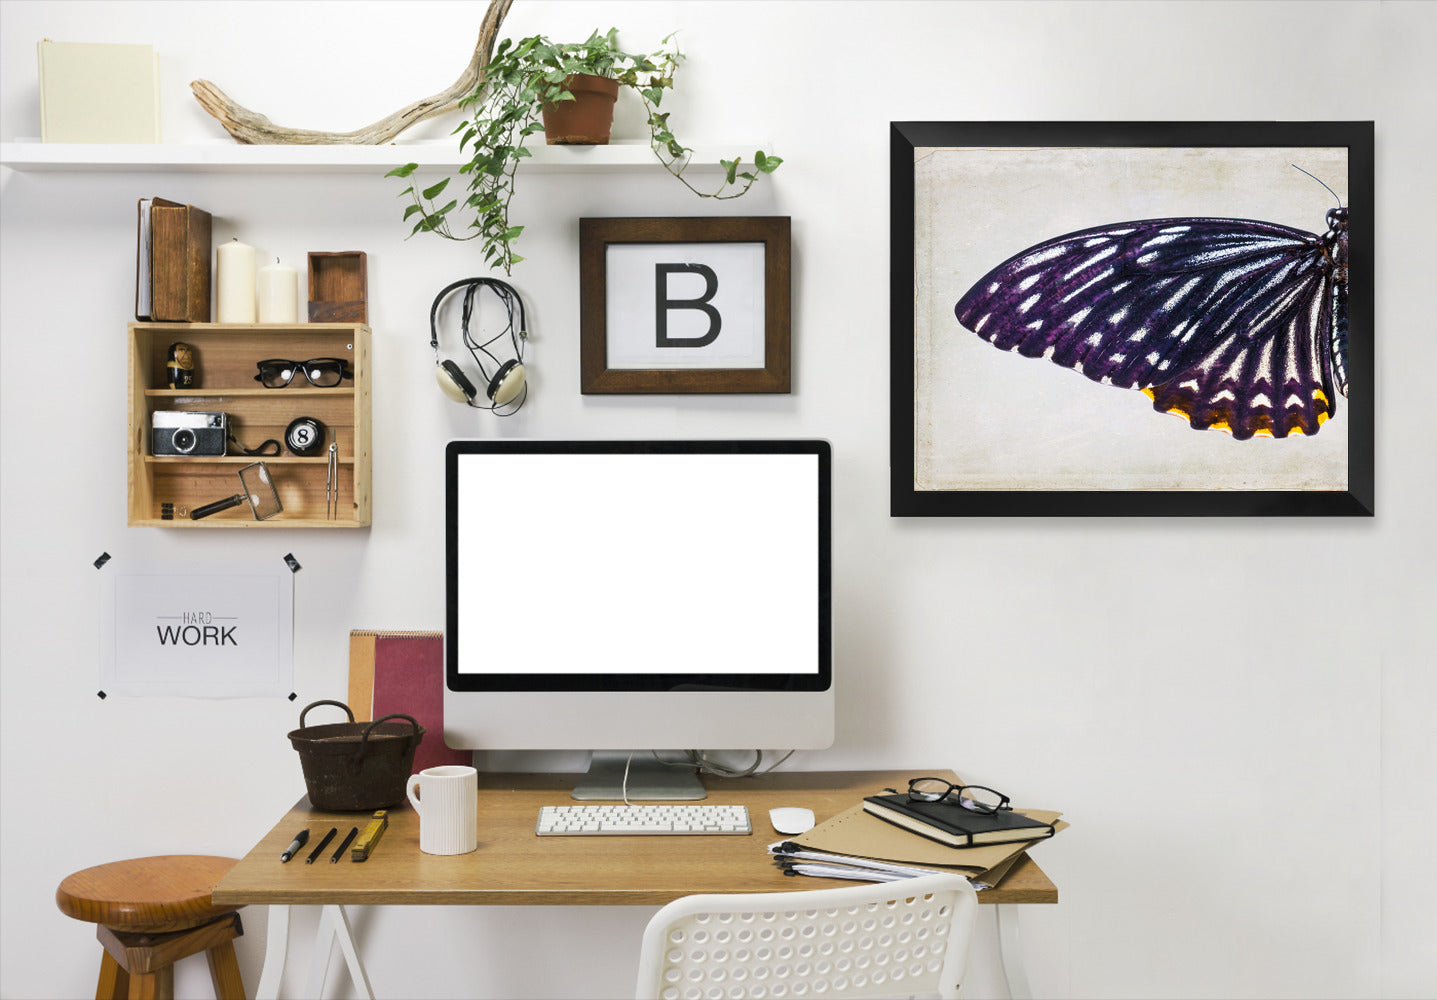 Purple Butterfly I By Chaos & Wonder Design - Black Framed Print - Wall Art - Americanflat